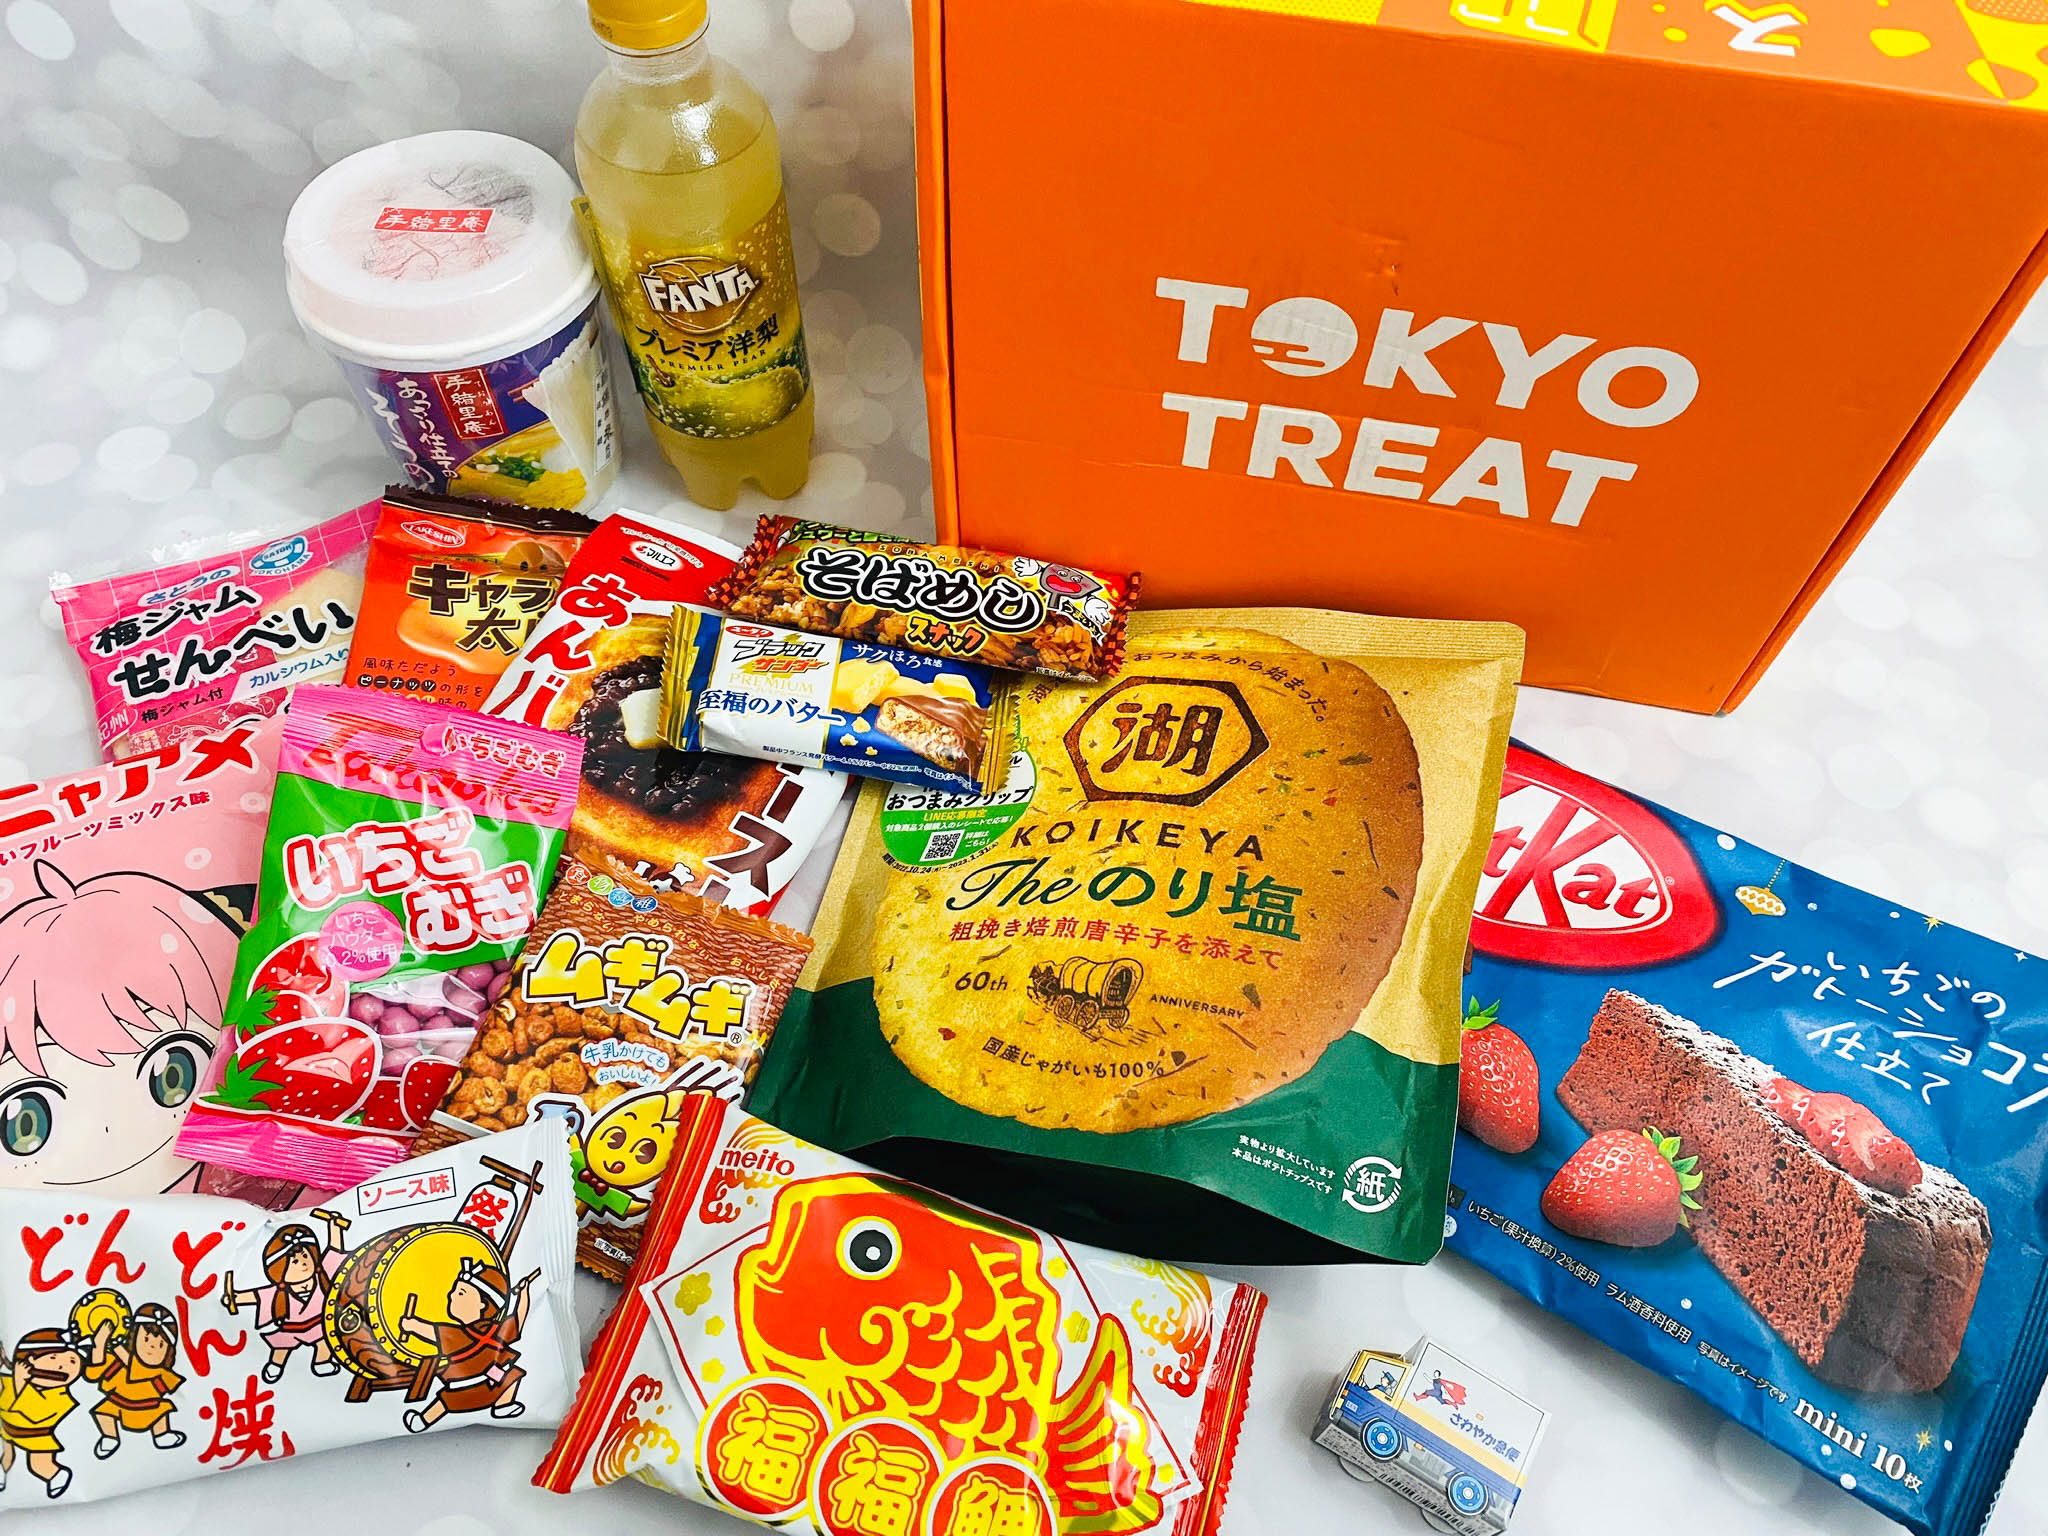 Tokyo Treat Box Review